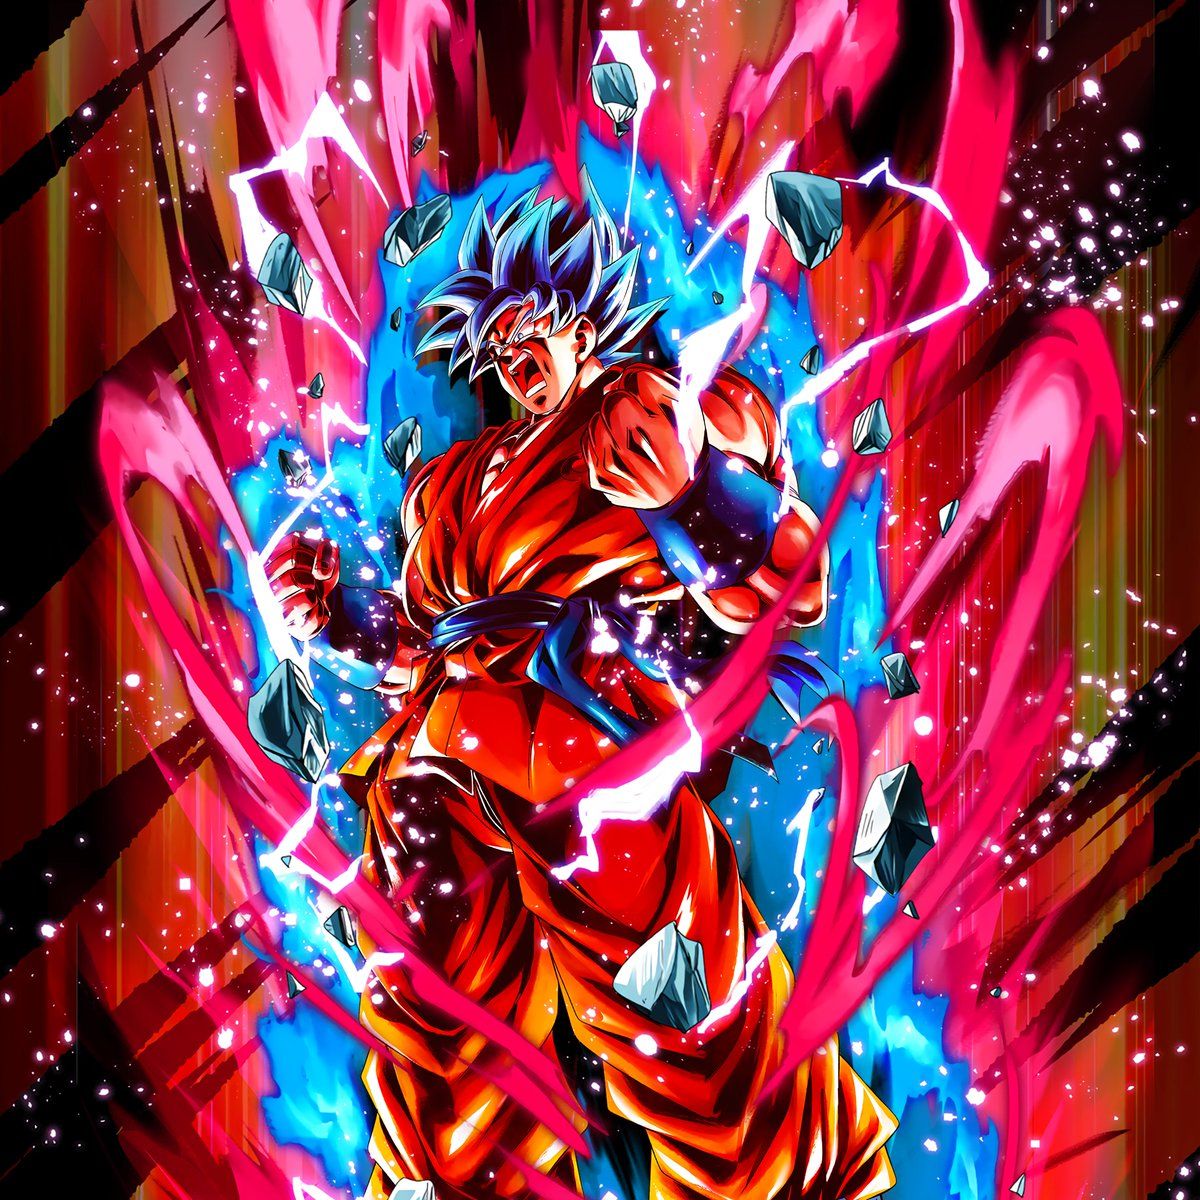 Goku goes super saiyan image